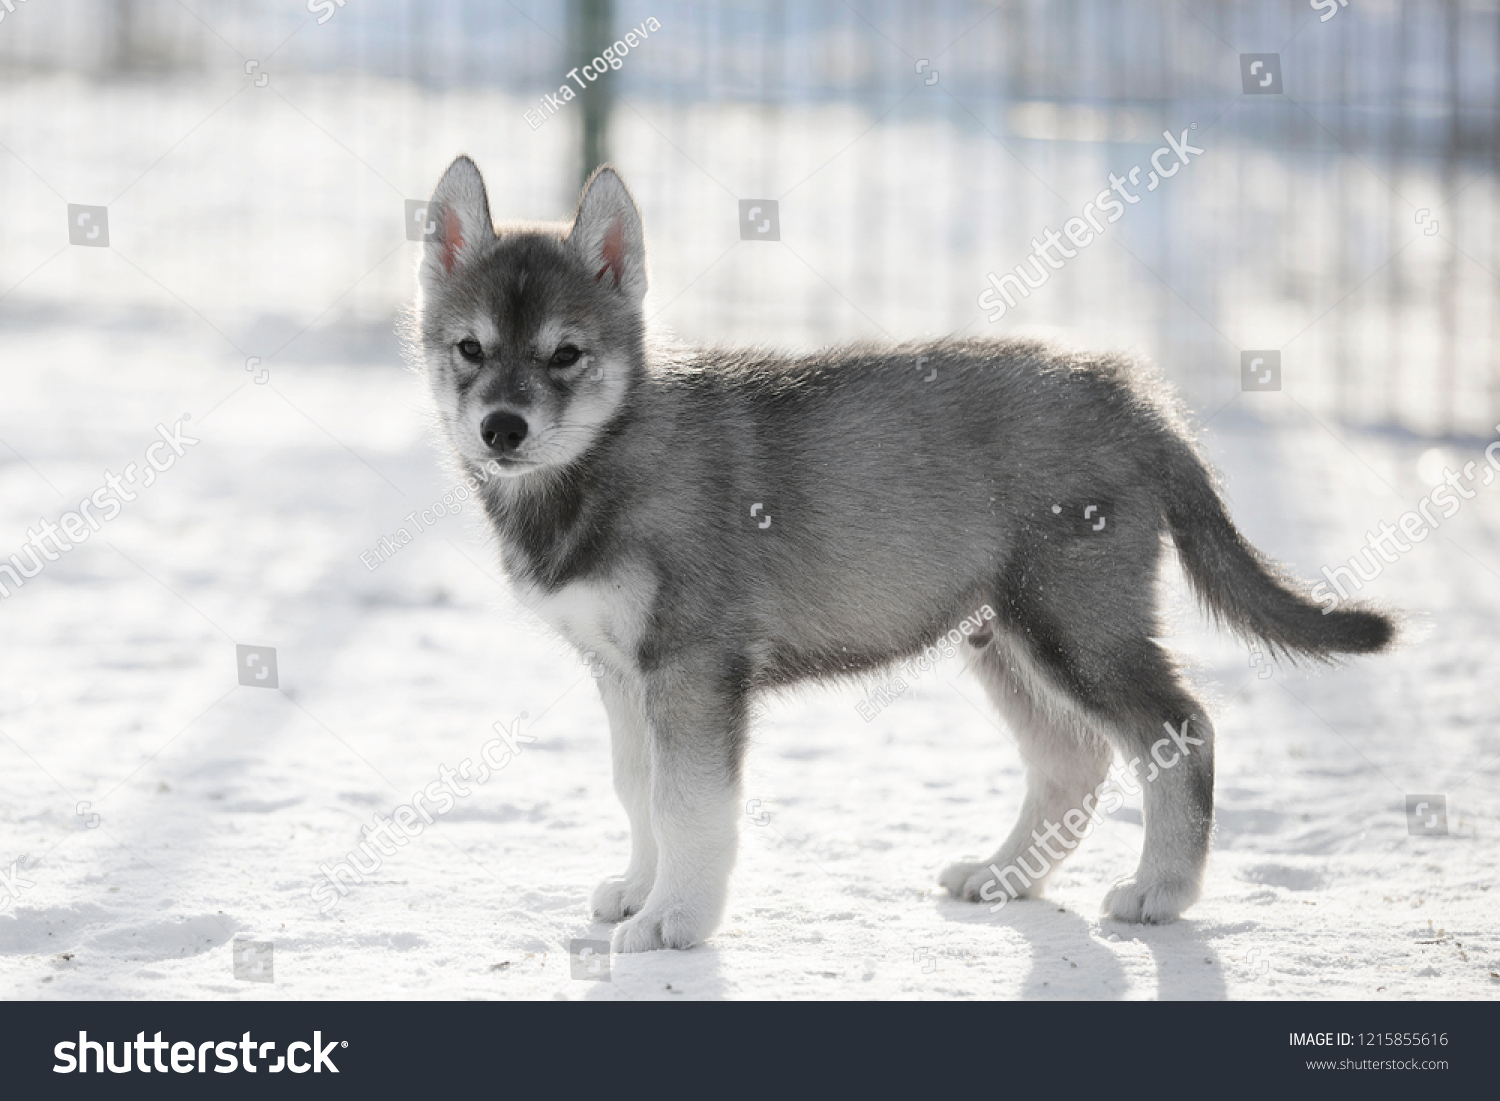 Cute Agouti Siberian Husky Puppies Animals Wildlife Stock Image 1215855616